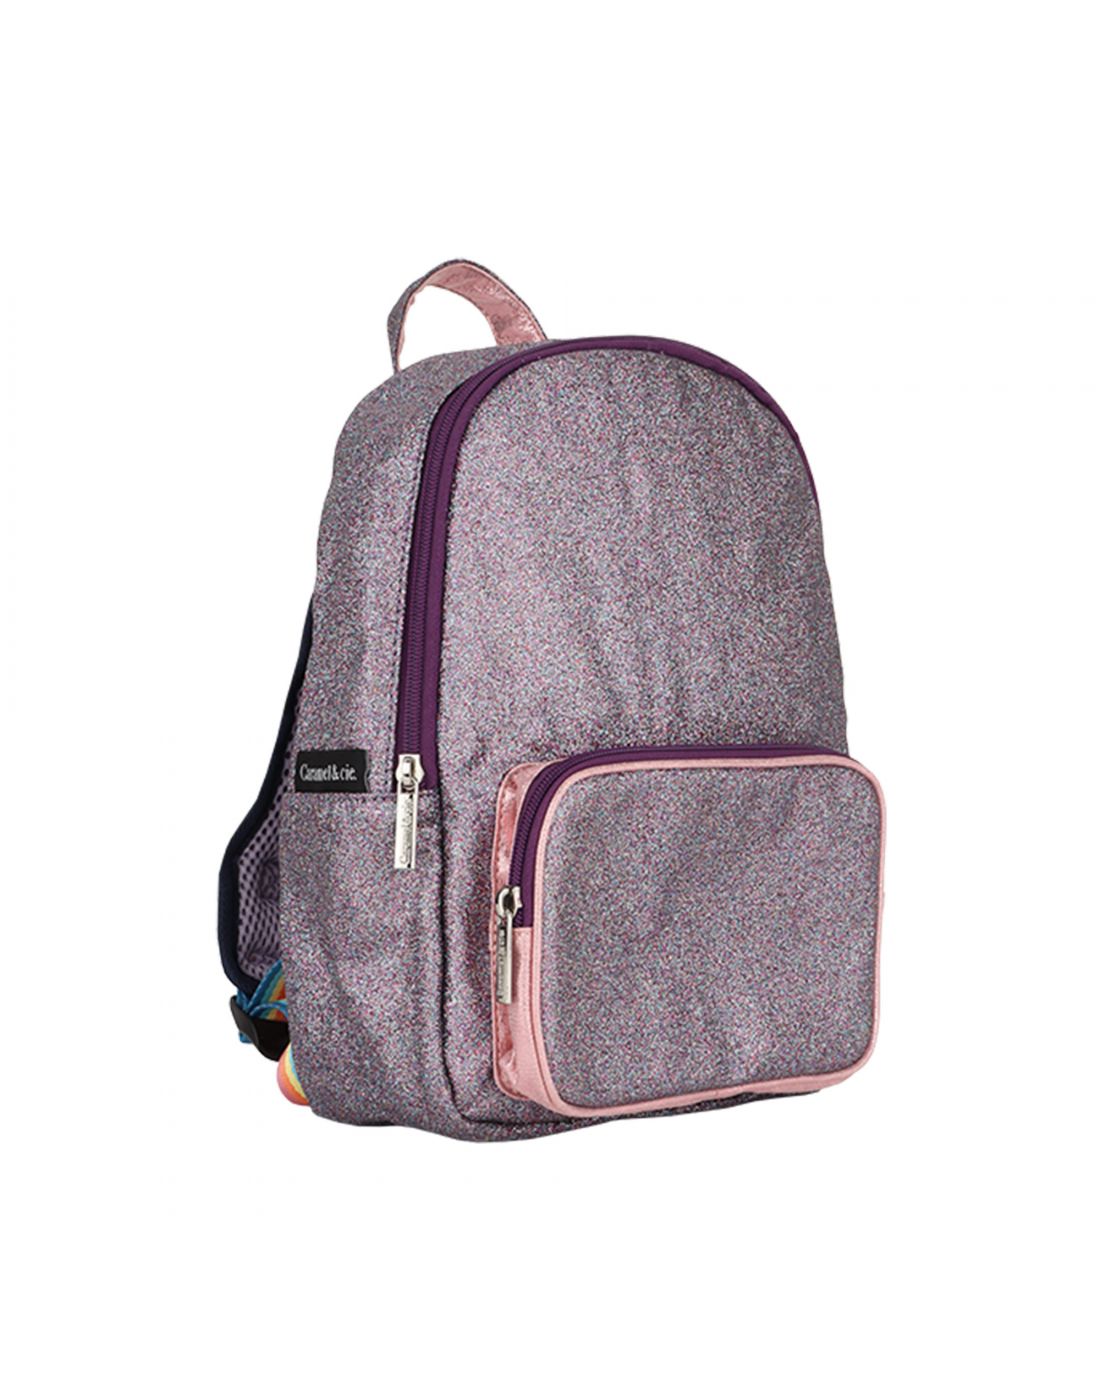 Caramel Backpack Small 31cm Glitter Purple